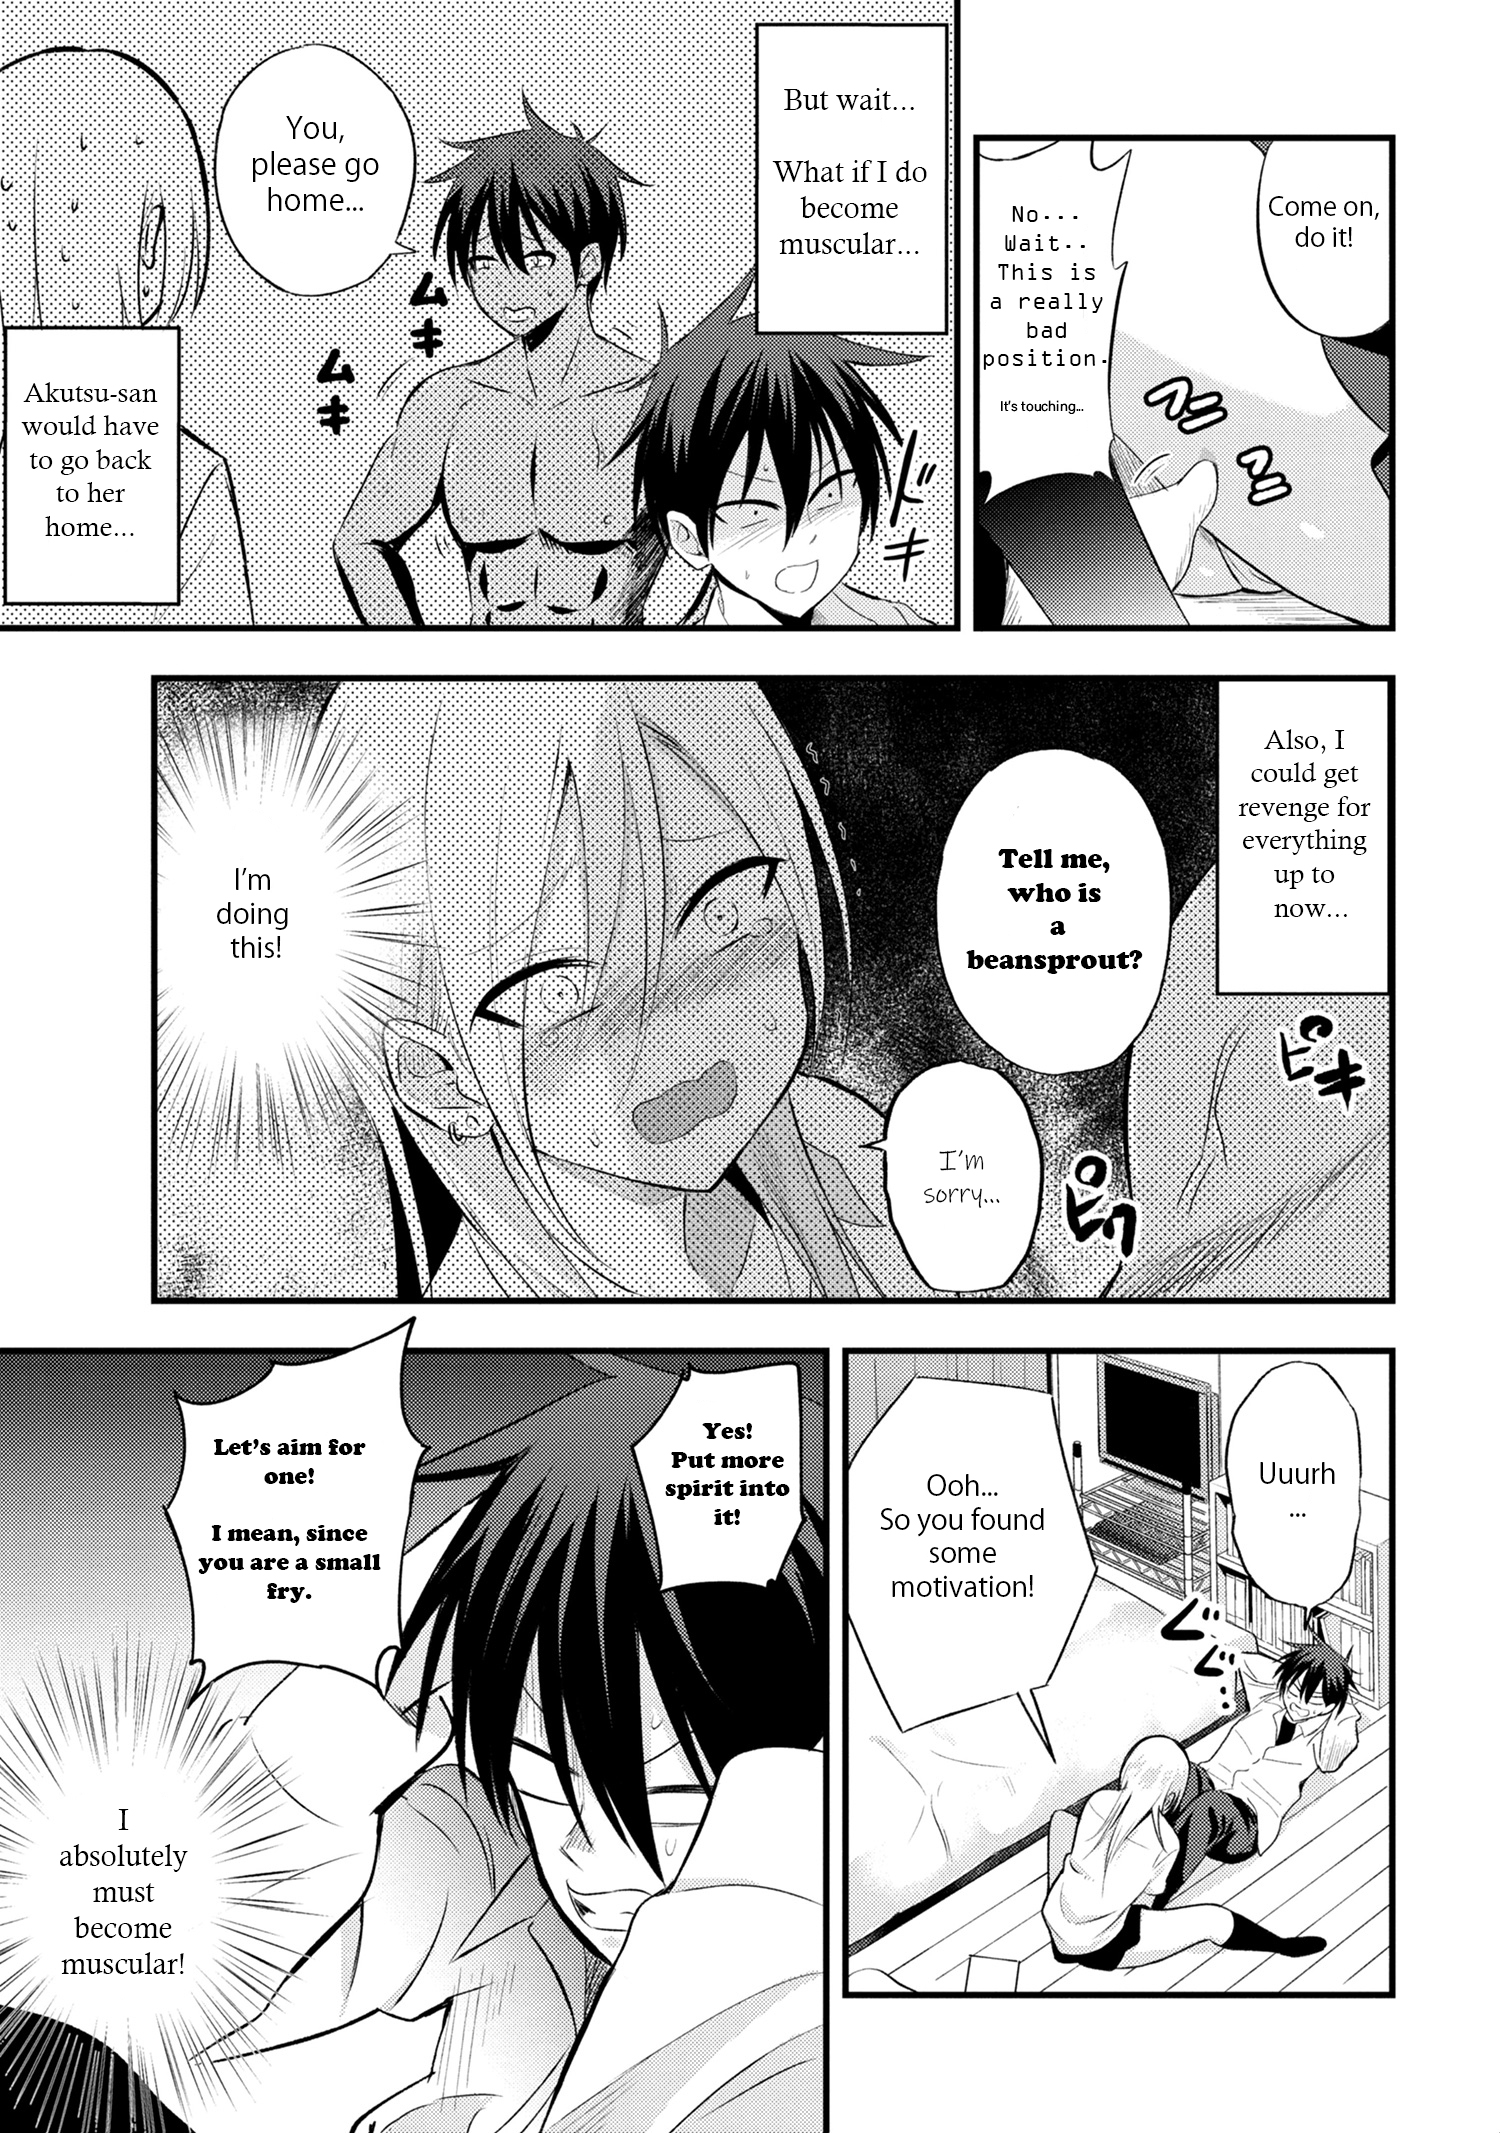 Please Go Home, Akutsu-San! Vol.1 Chapter 22 - Picture 3